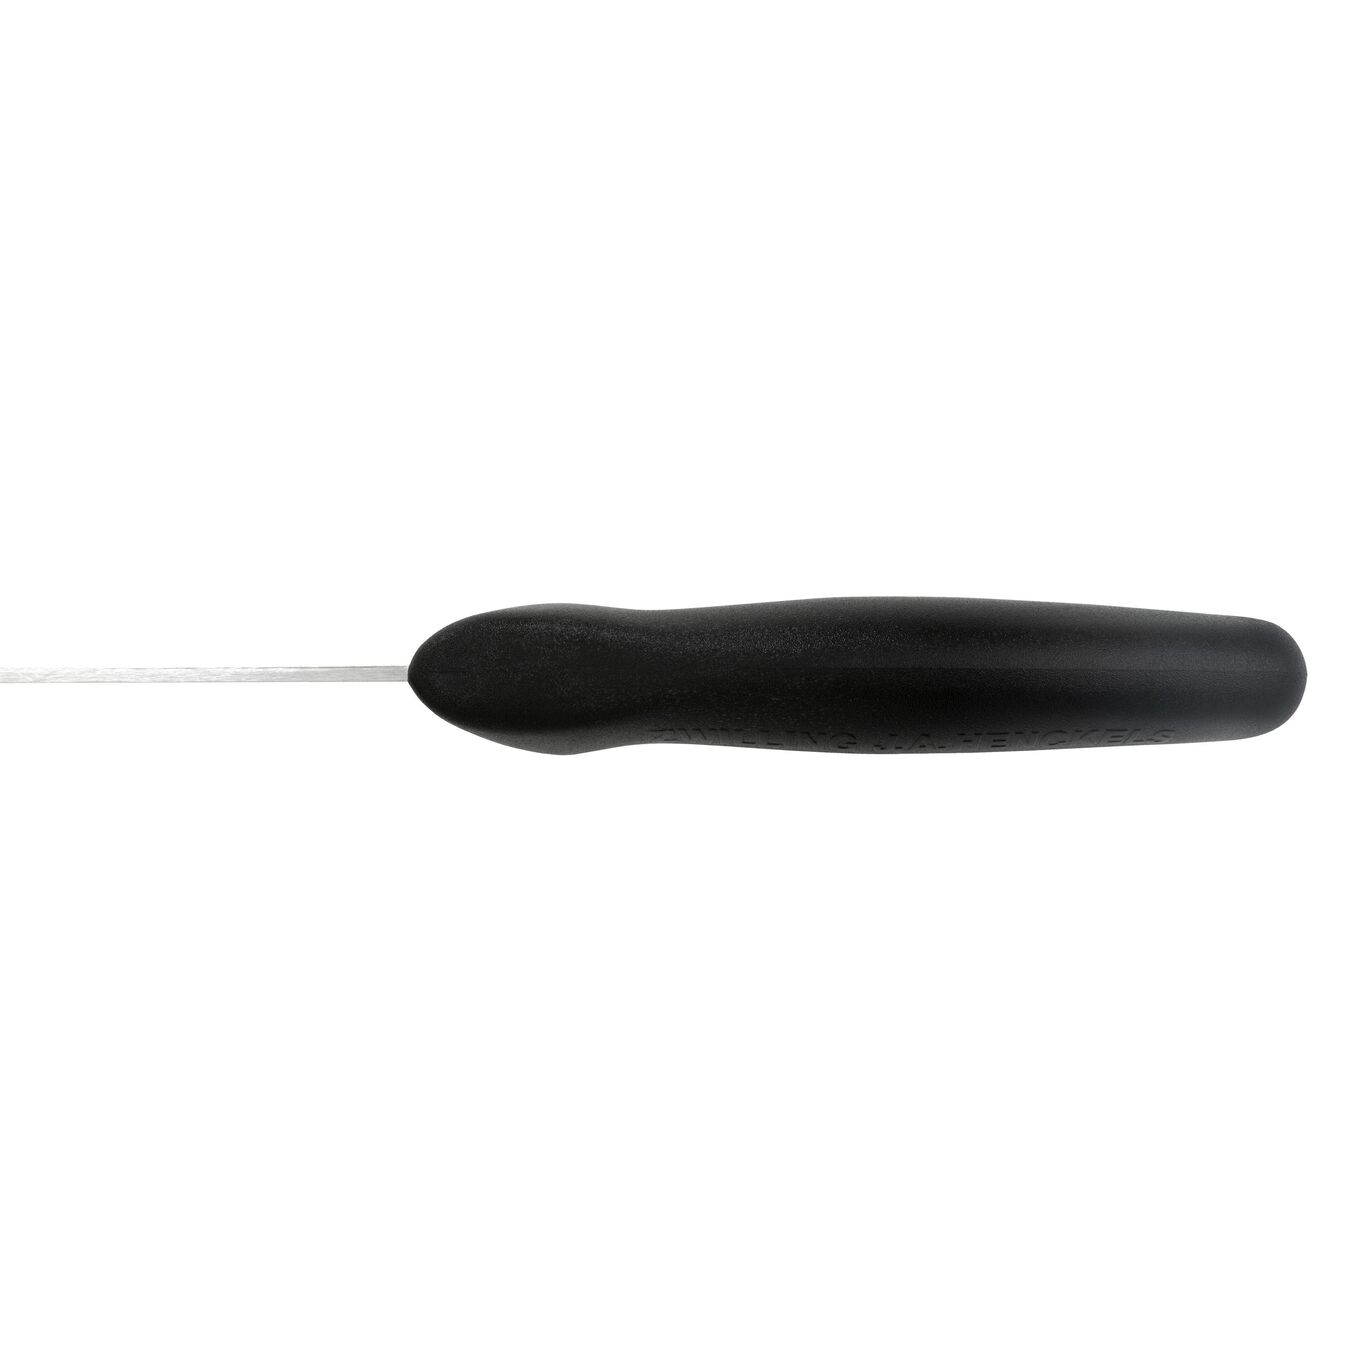 Cuchillo de chef 20 cm,,large 3